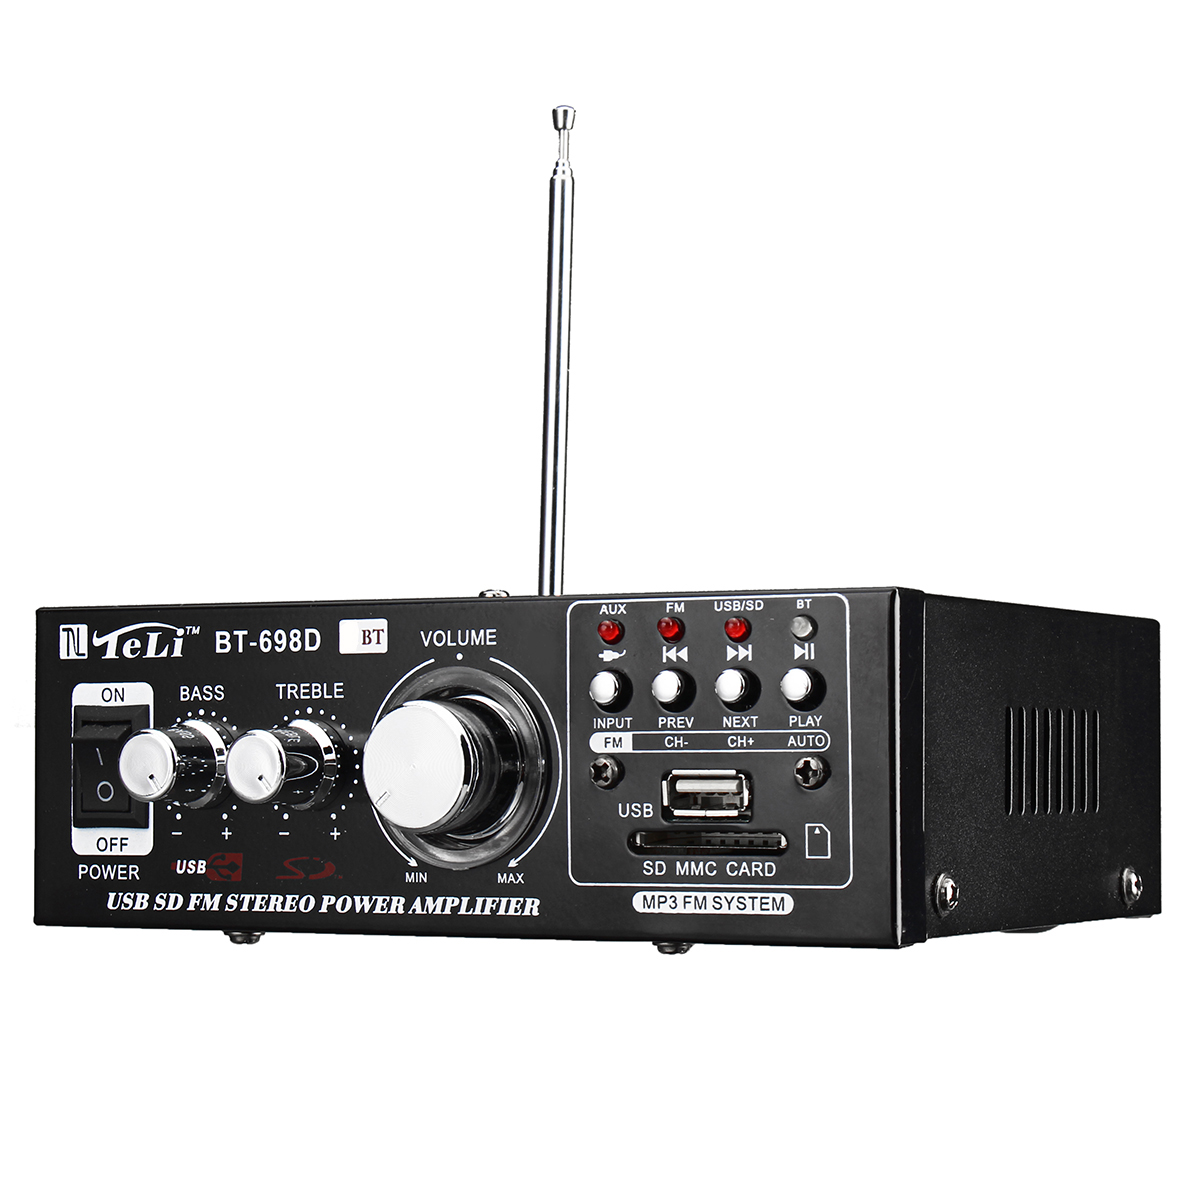 USB-SD-HIFI-Power-Amplifier-HiFi-Digital-Audio-Stereo-Amplifier-bluetooth-FM-Radio-Equipment-1423186-4